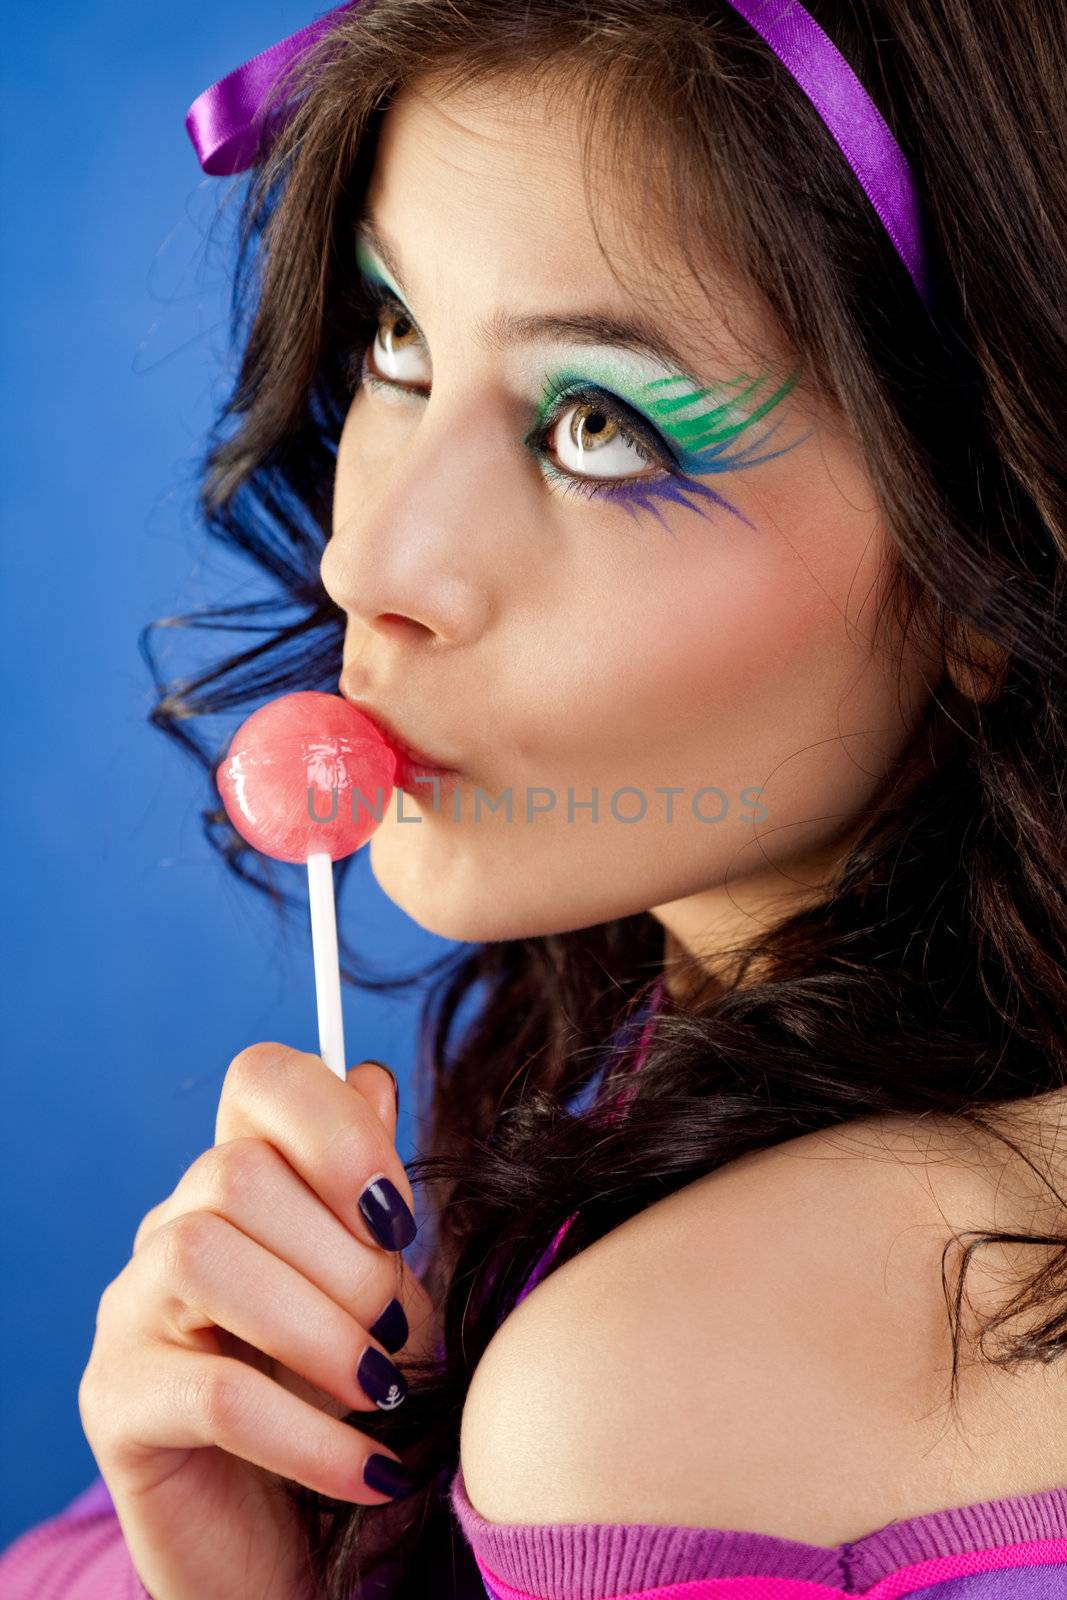 Girl licking lollipop by vilevi